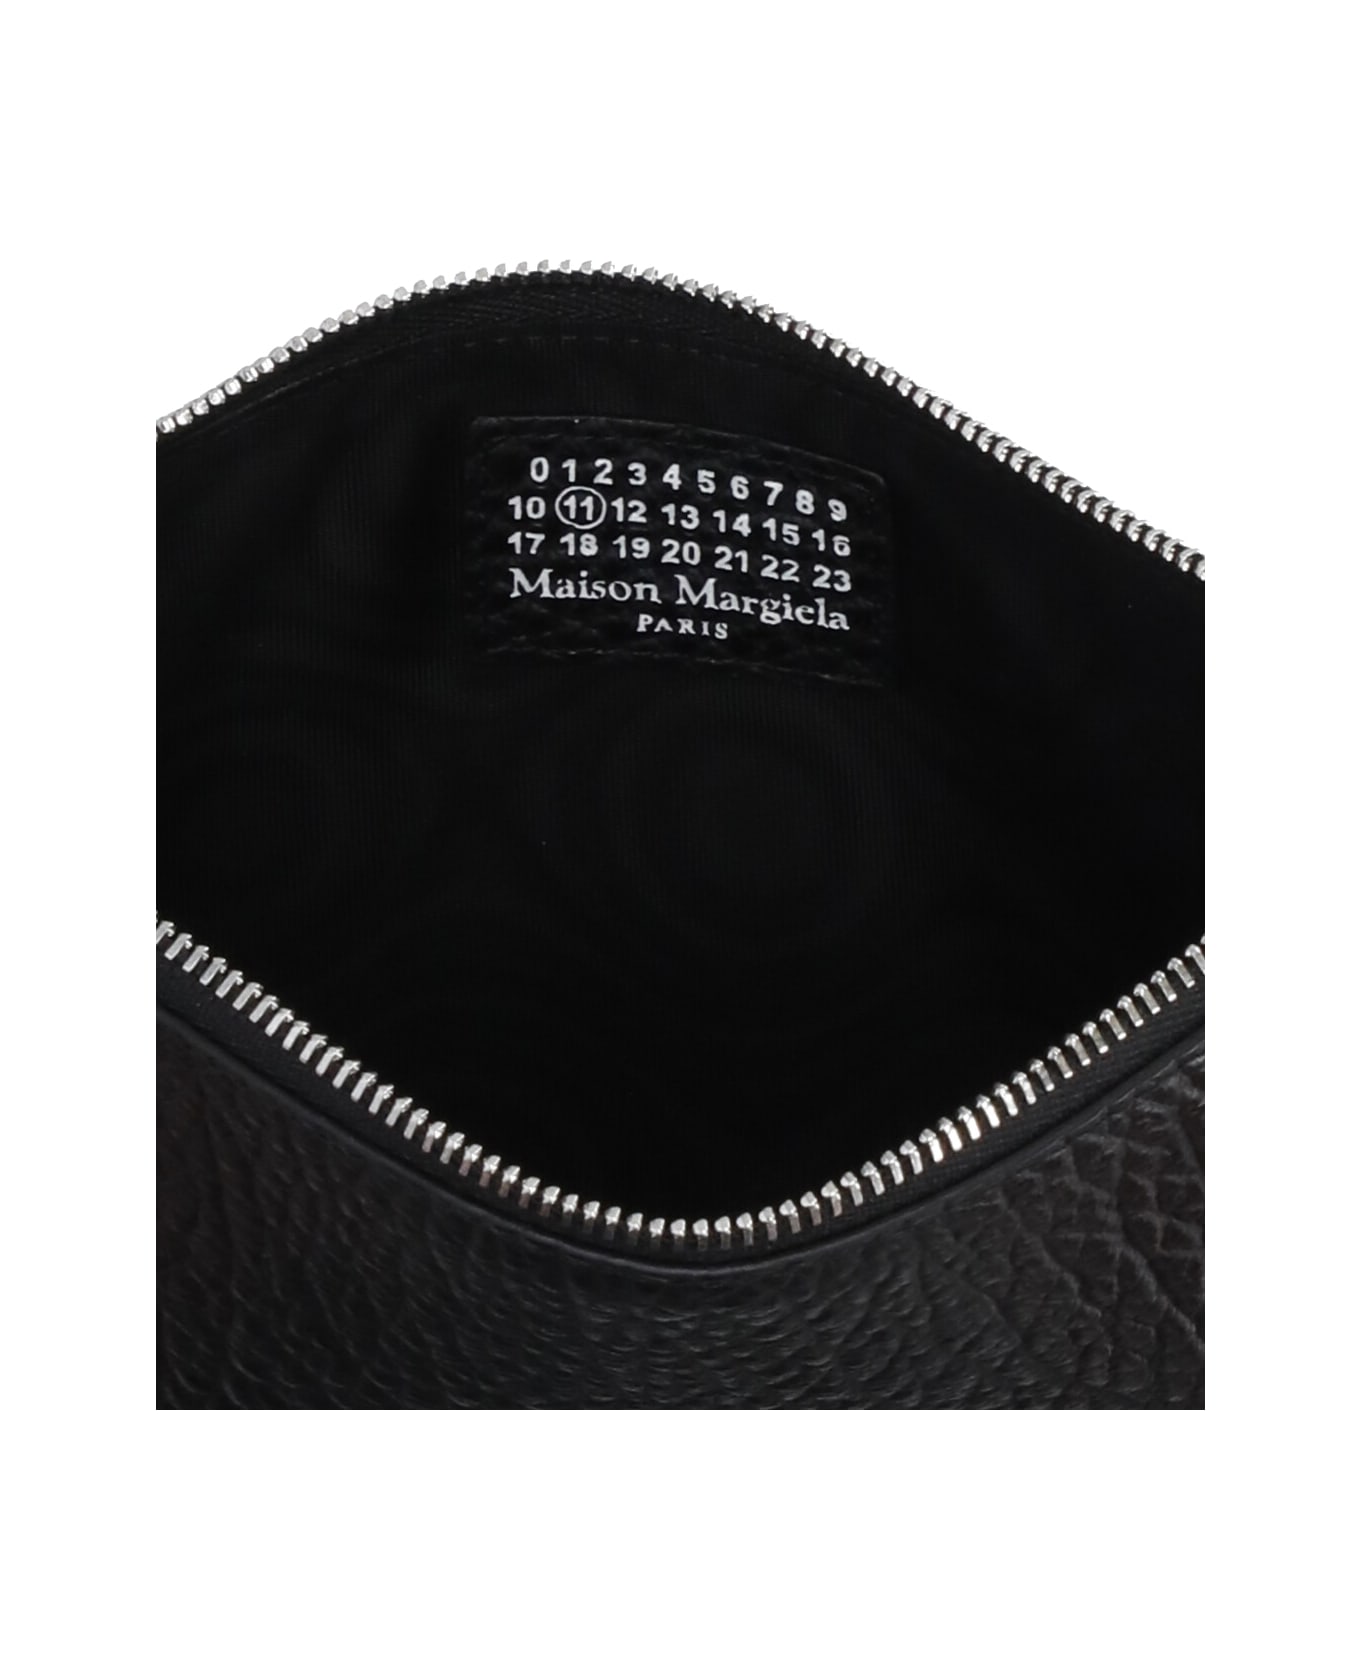 Maison Margiela Leather Clutch - Black